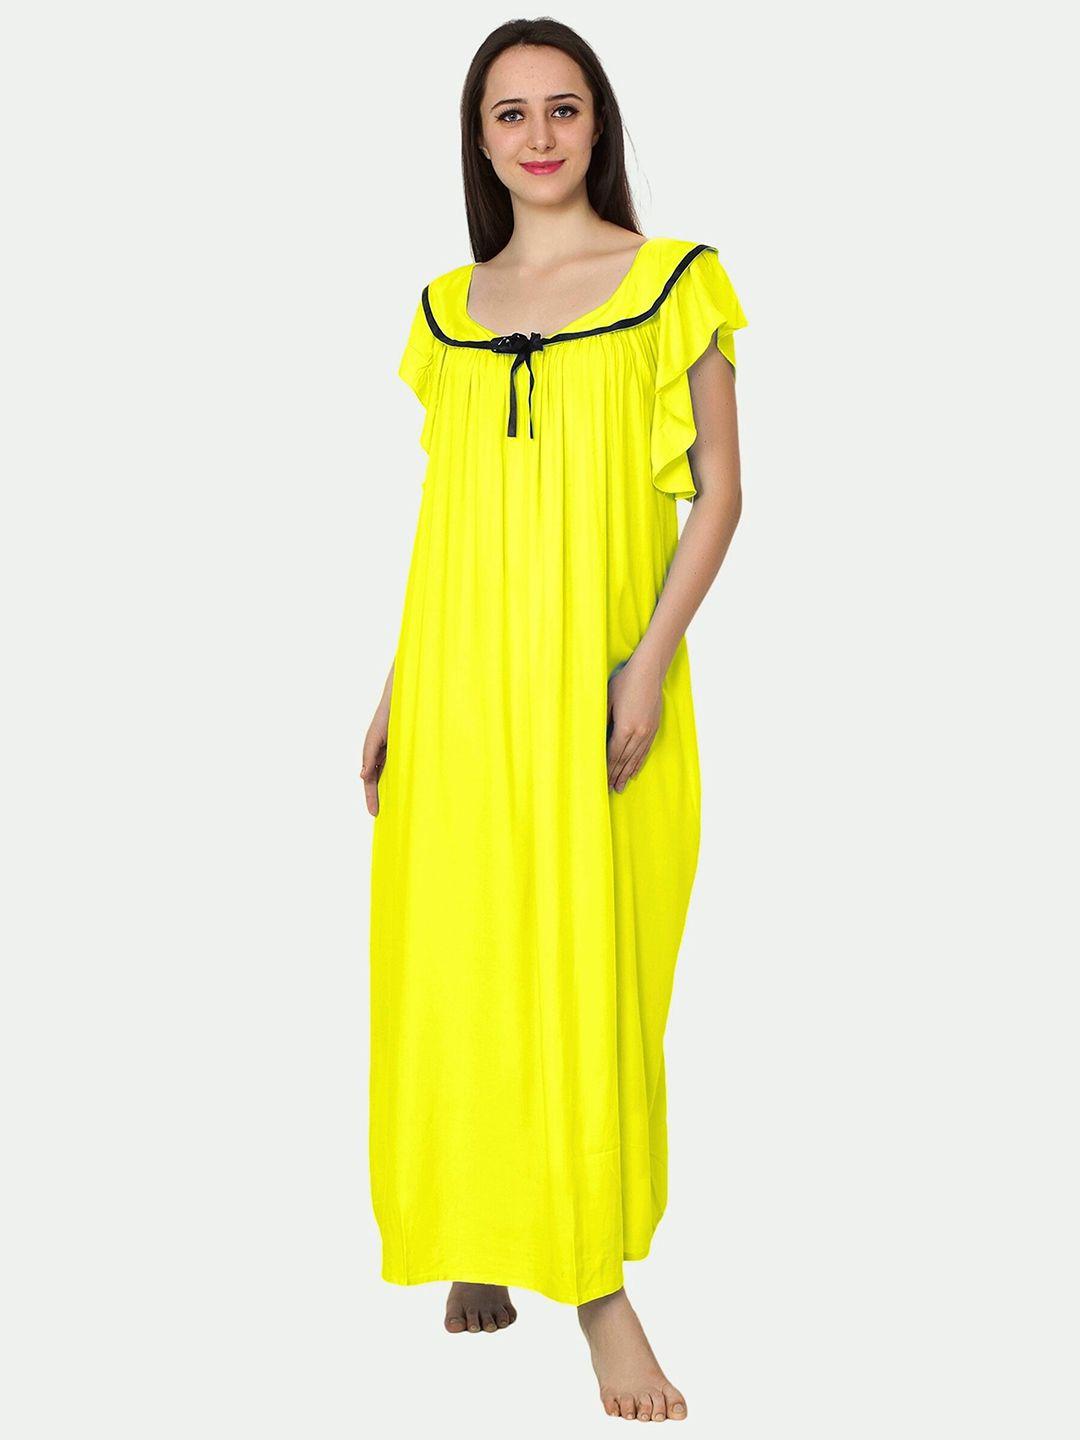 patrorna women yellow maxi nightdress